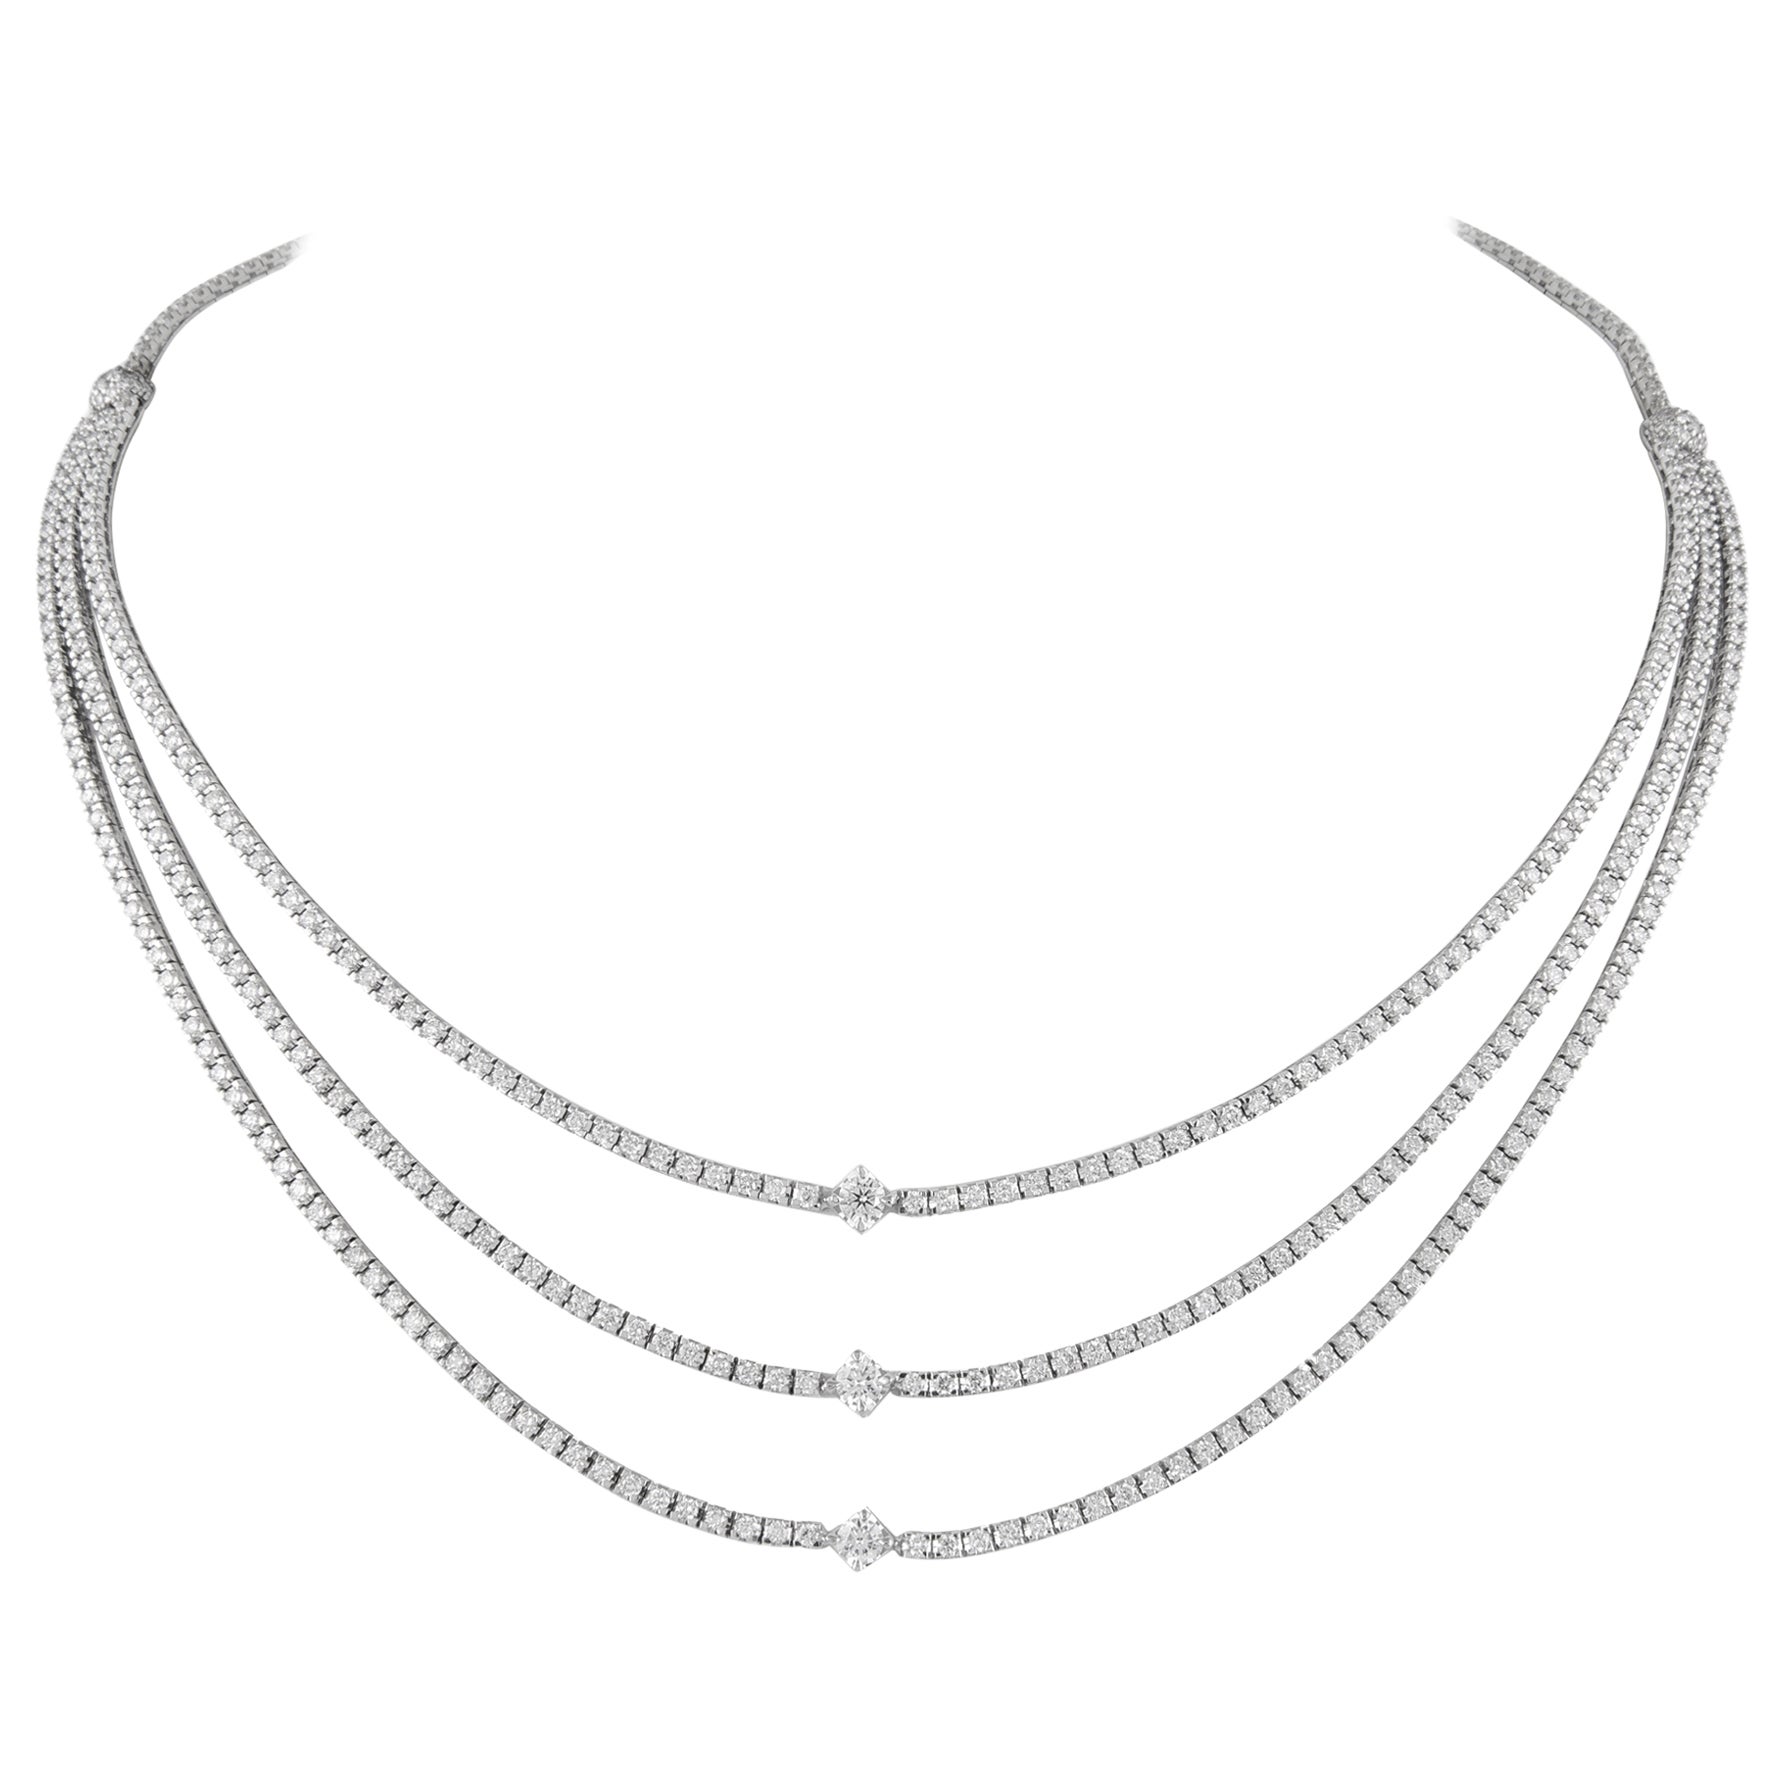 Alexander 9.02 Carat Diamond 18k White Gold 3-Row Tennis Necklace